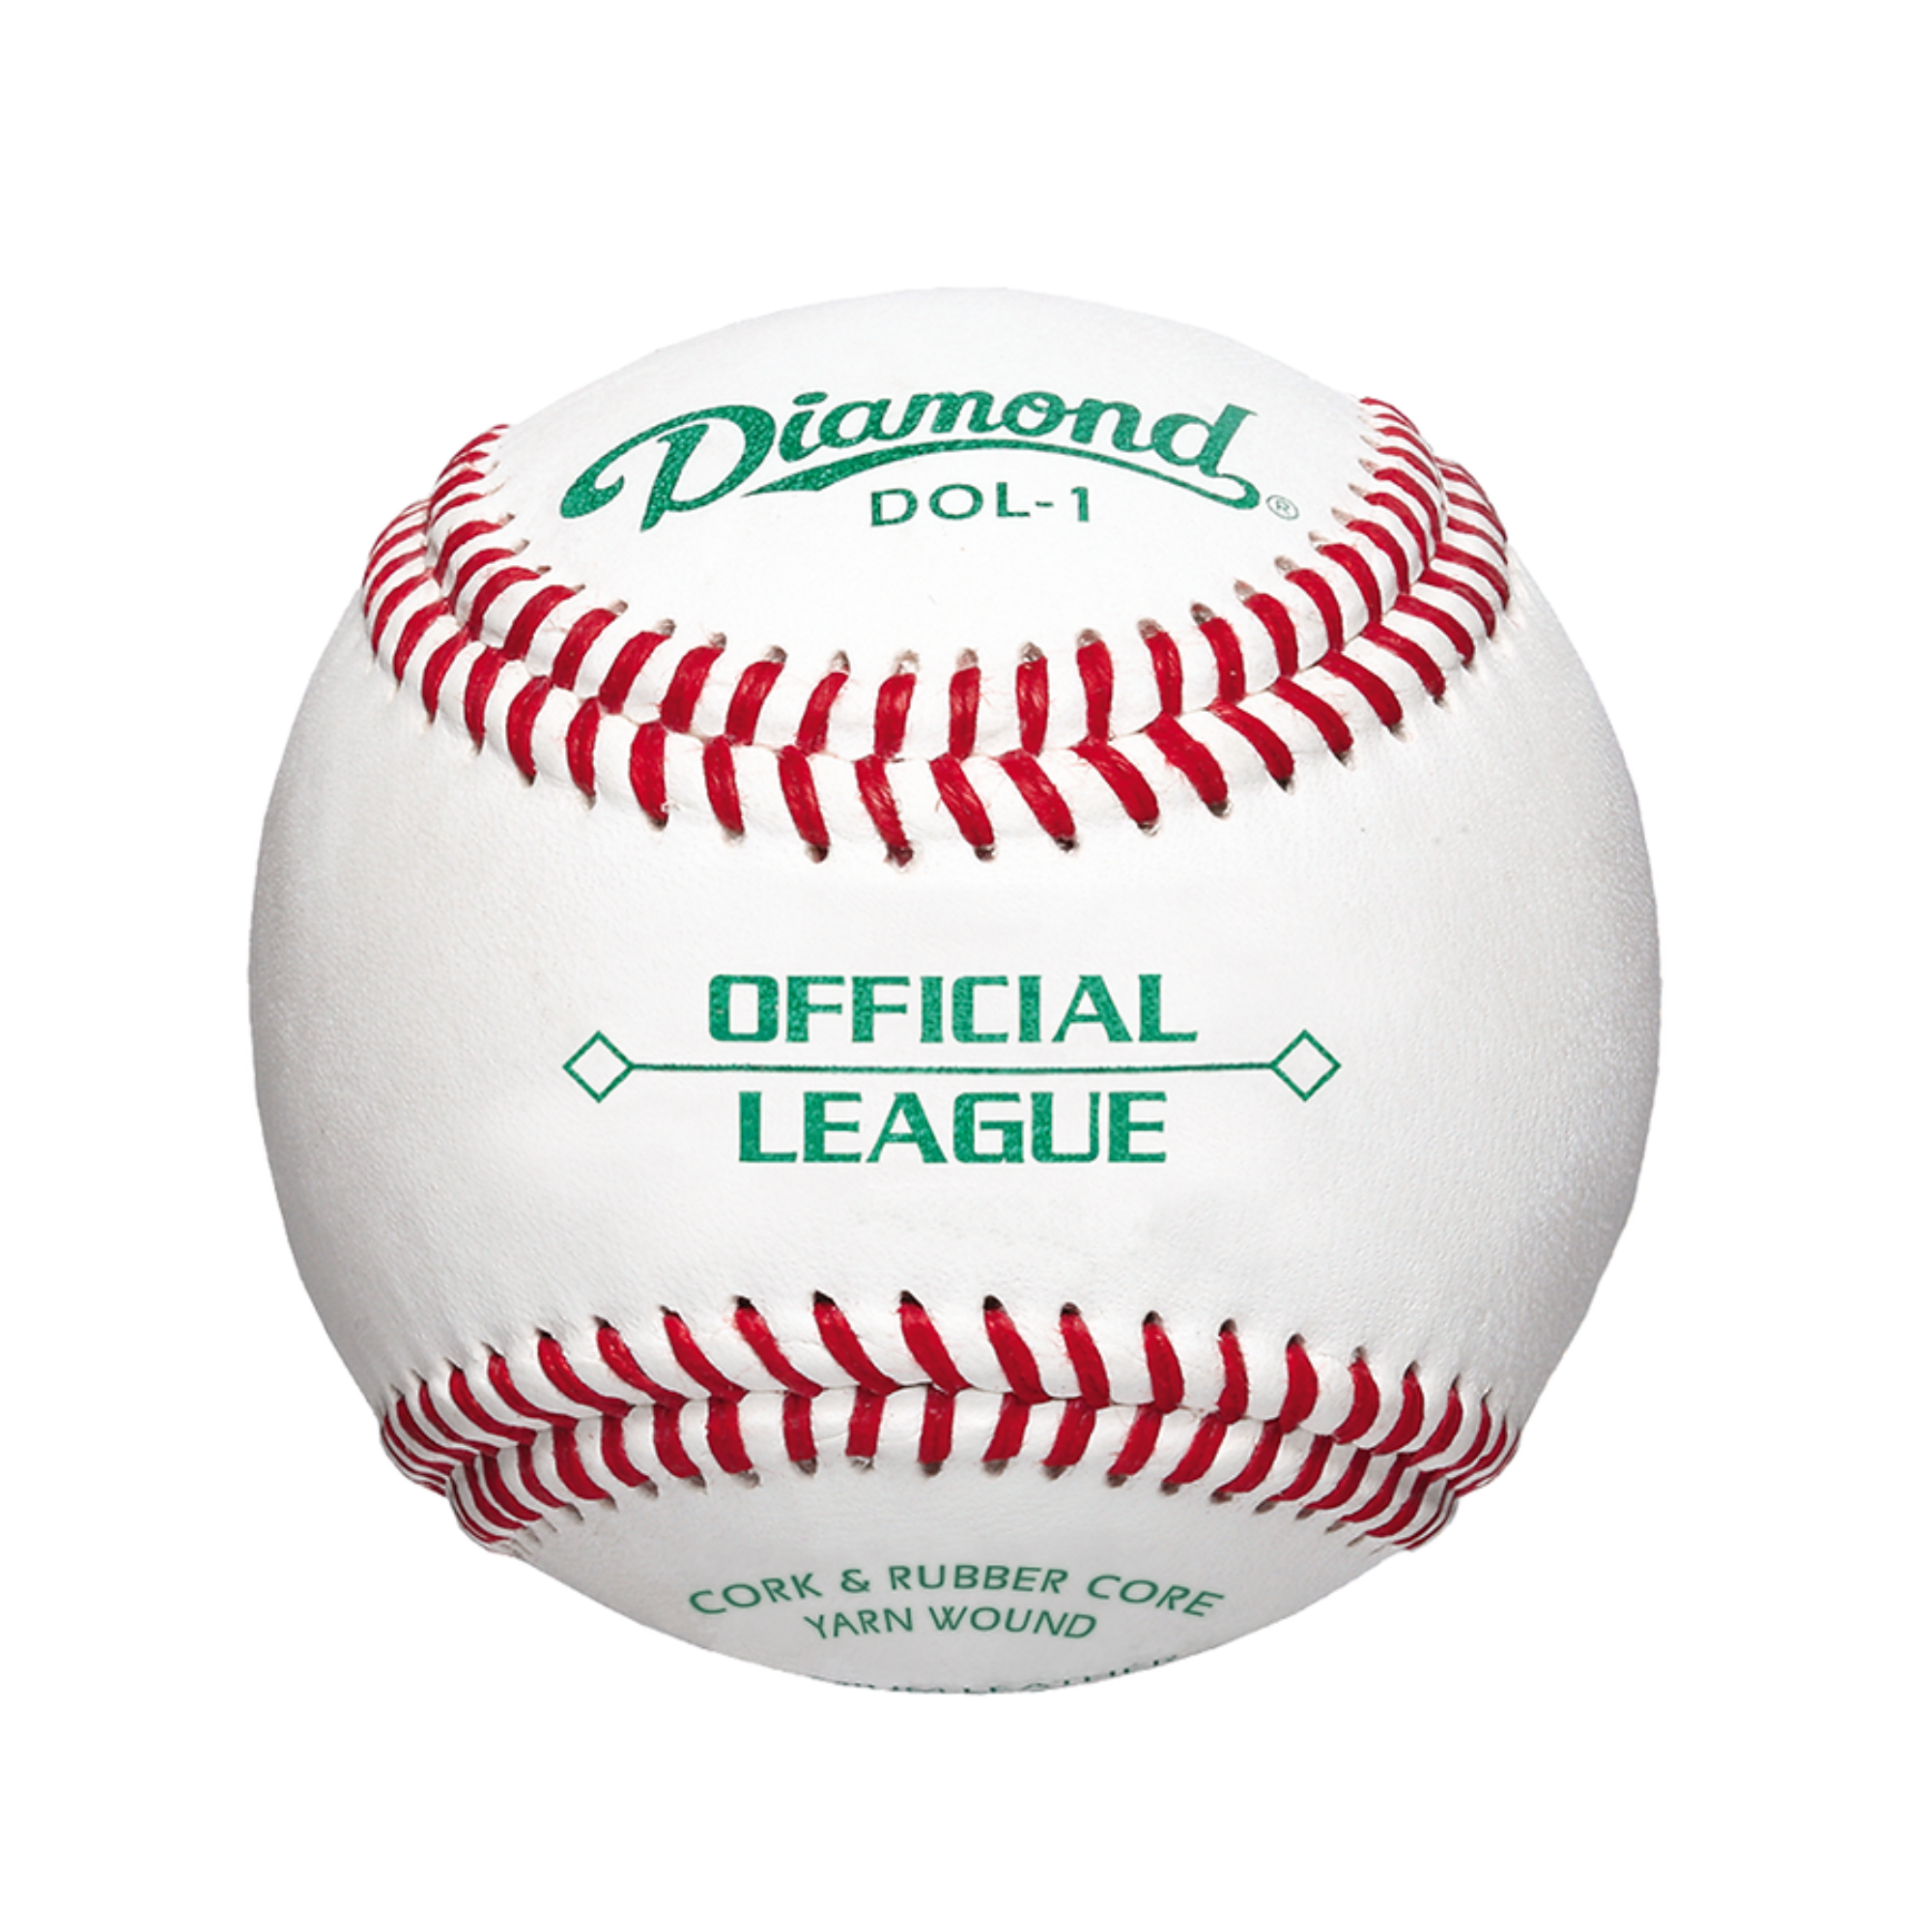 Diamond DOL-1 Baseballs Dozen